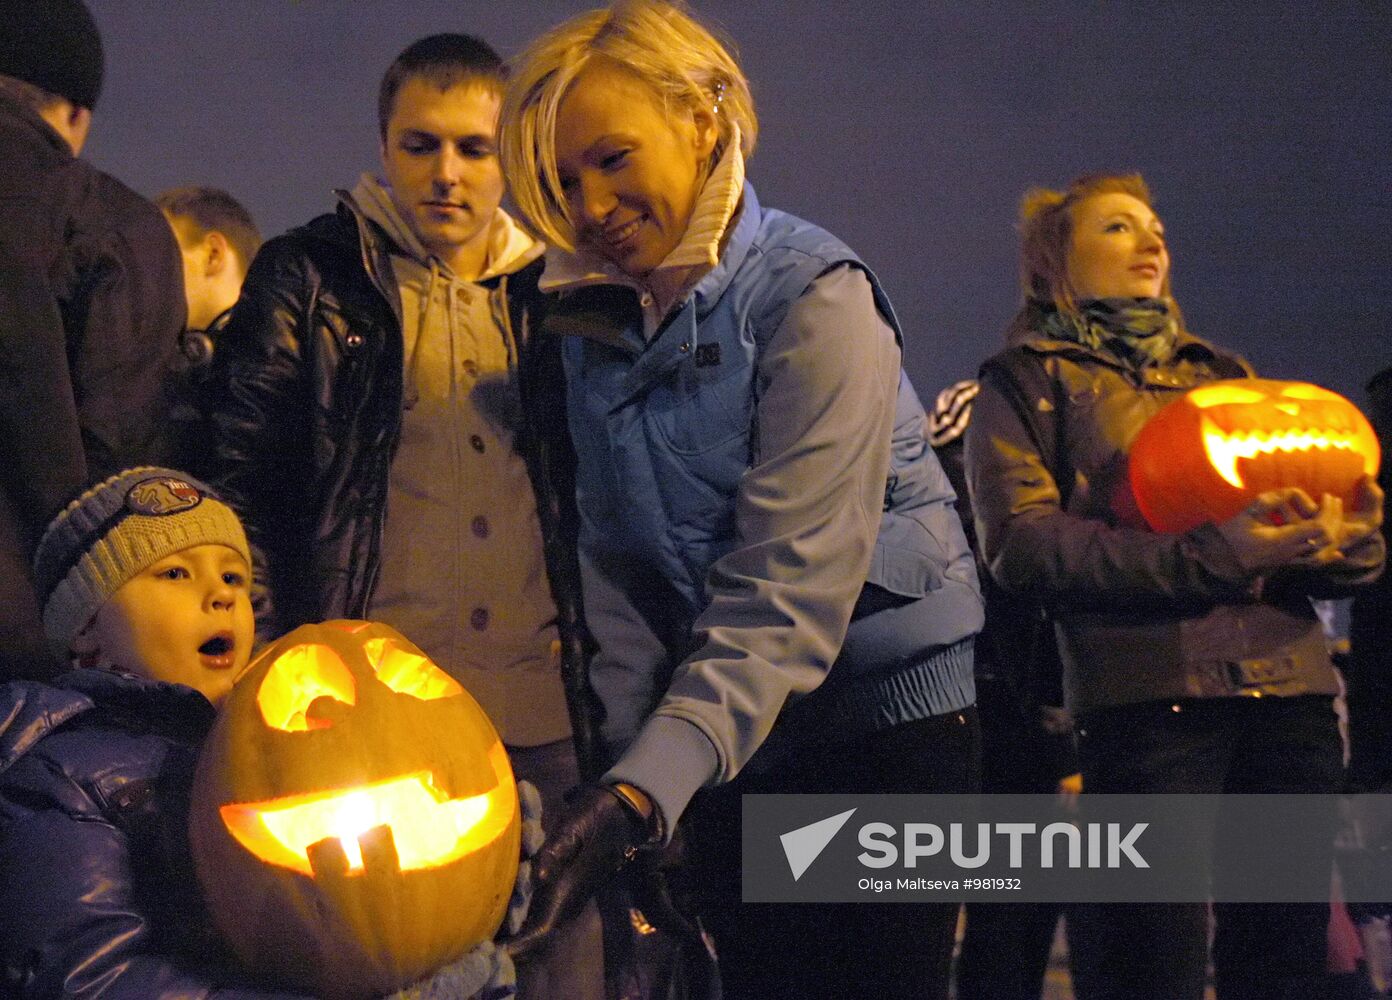 Halloween art flashmob staged in St. Petersburg